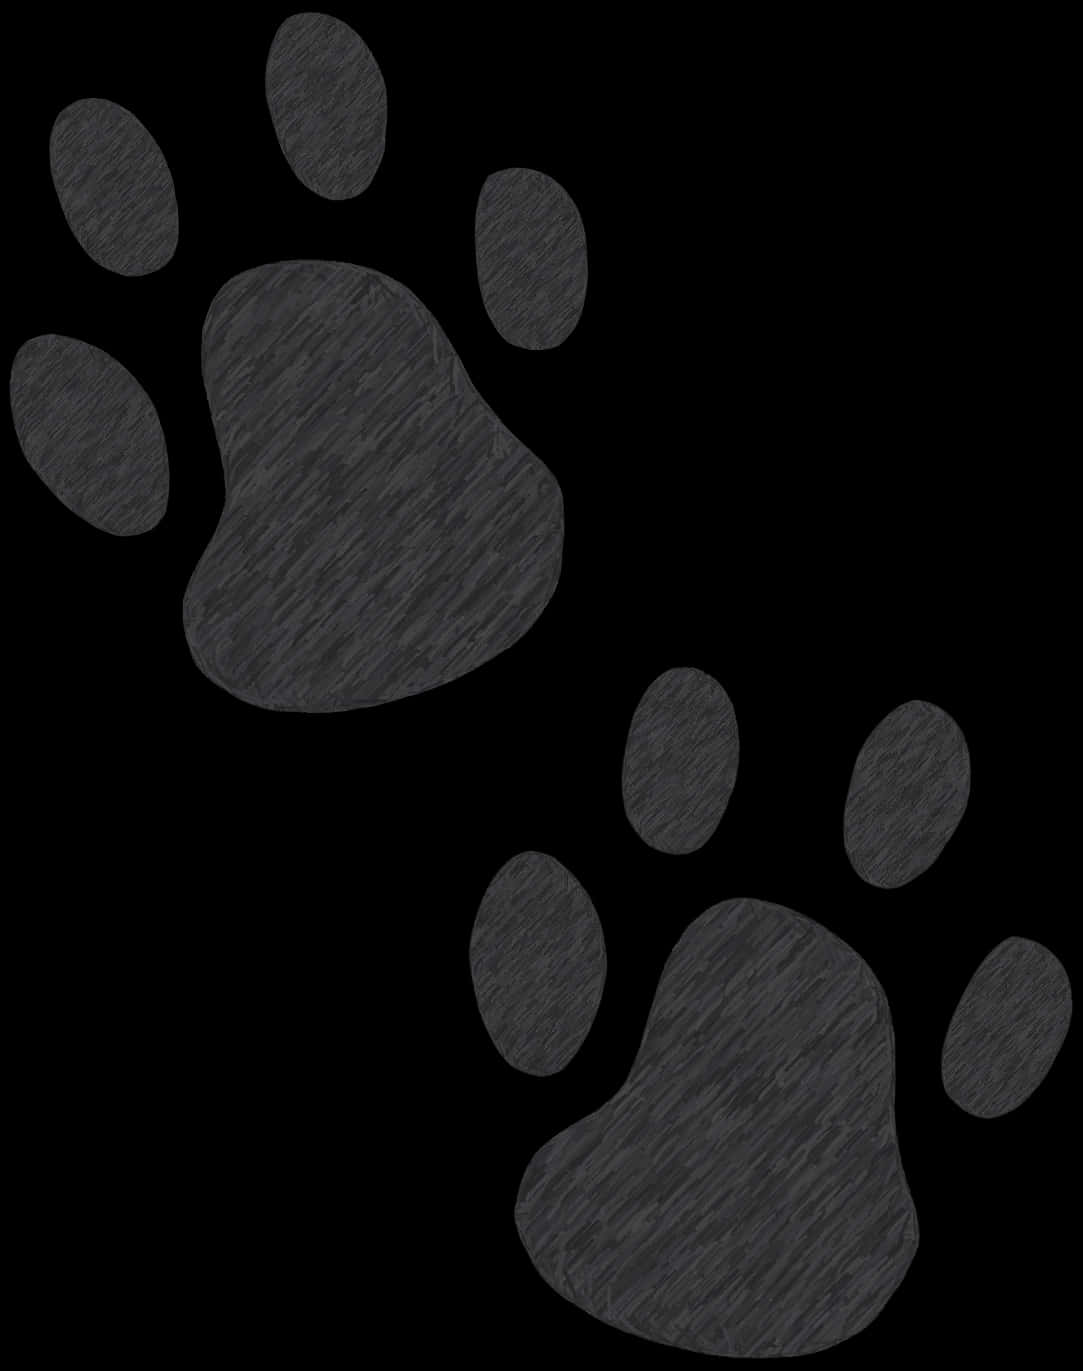 Textured Dog Paw Printson Black Background